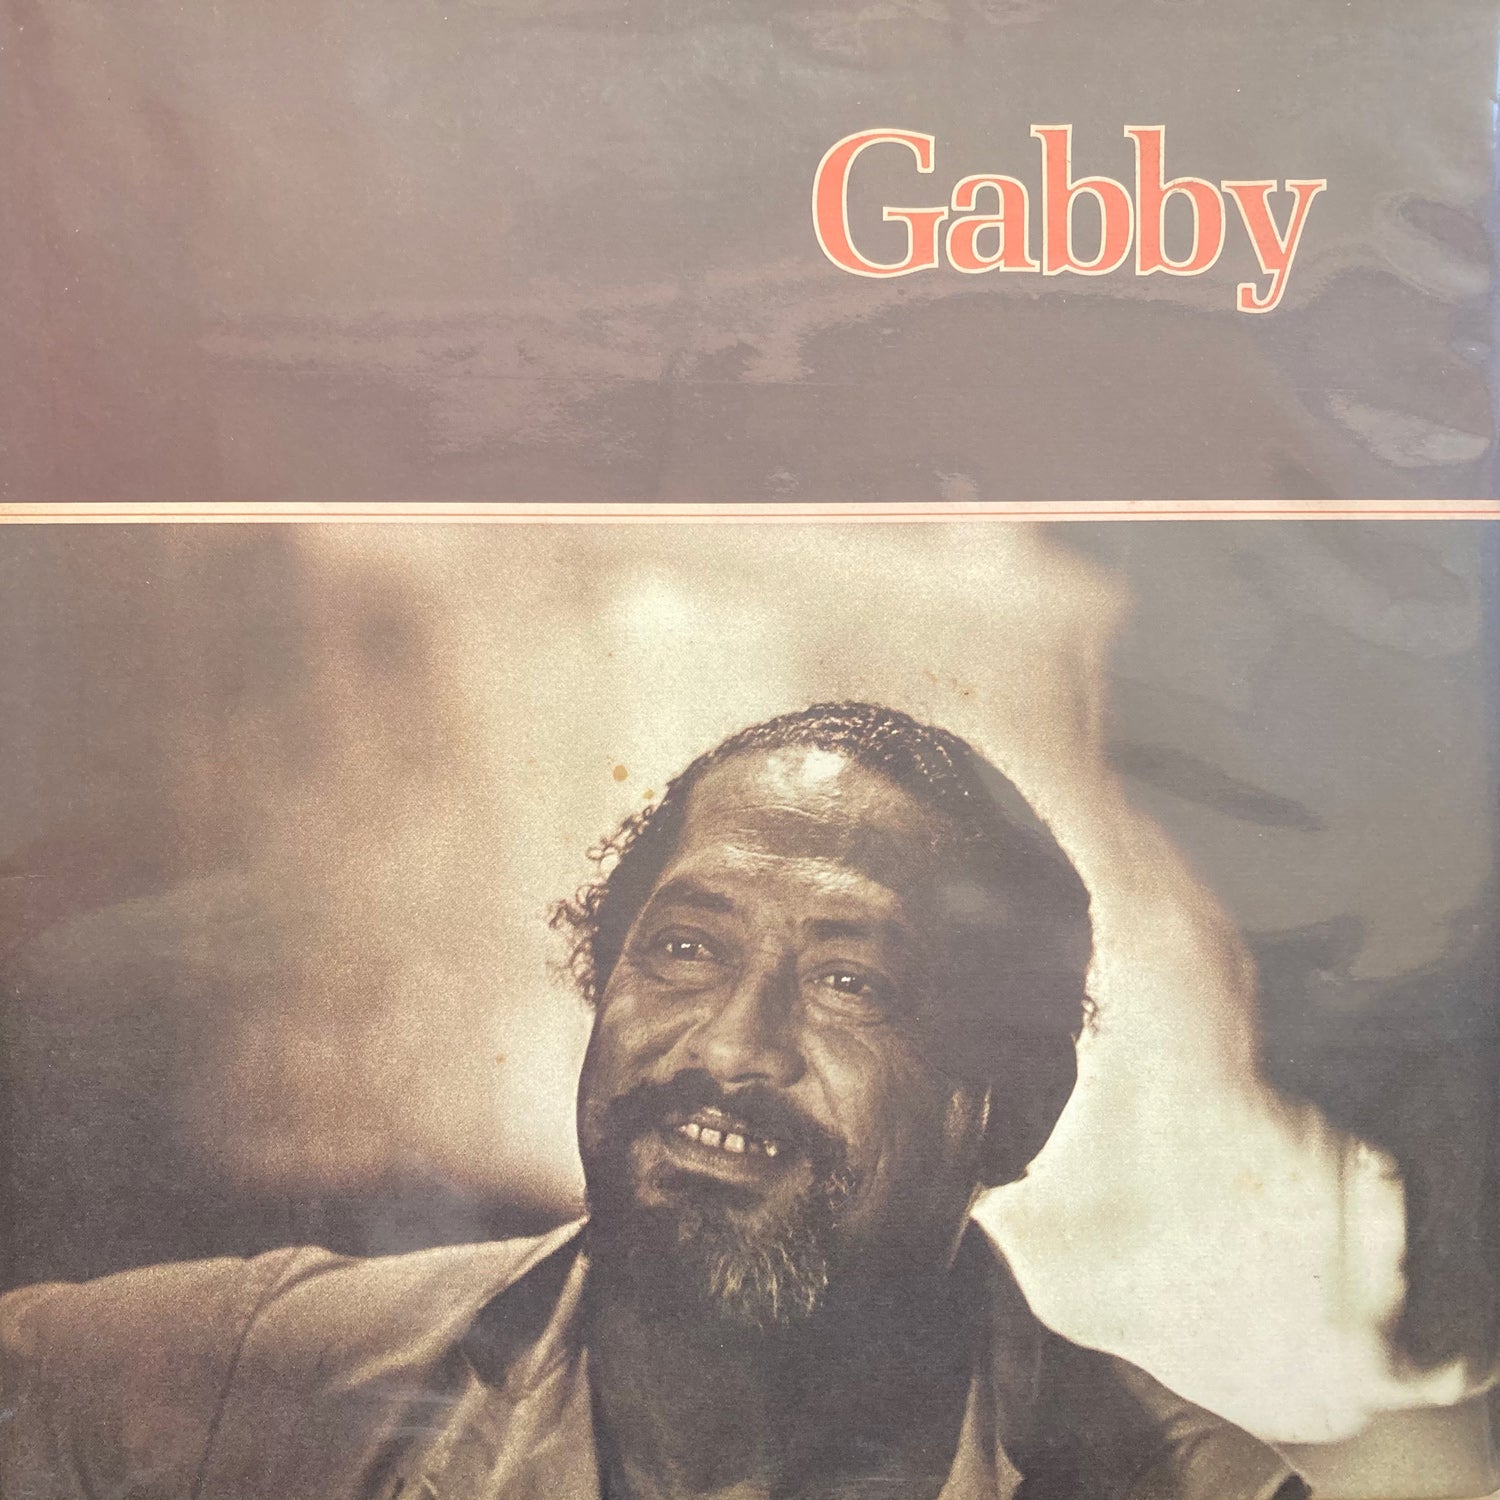 Gabby Pahinui - Gabby [Brown LP]